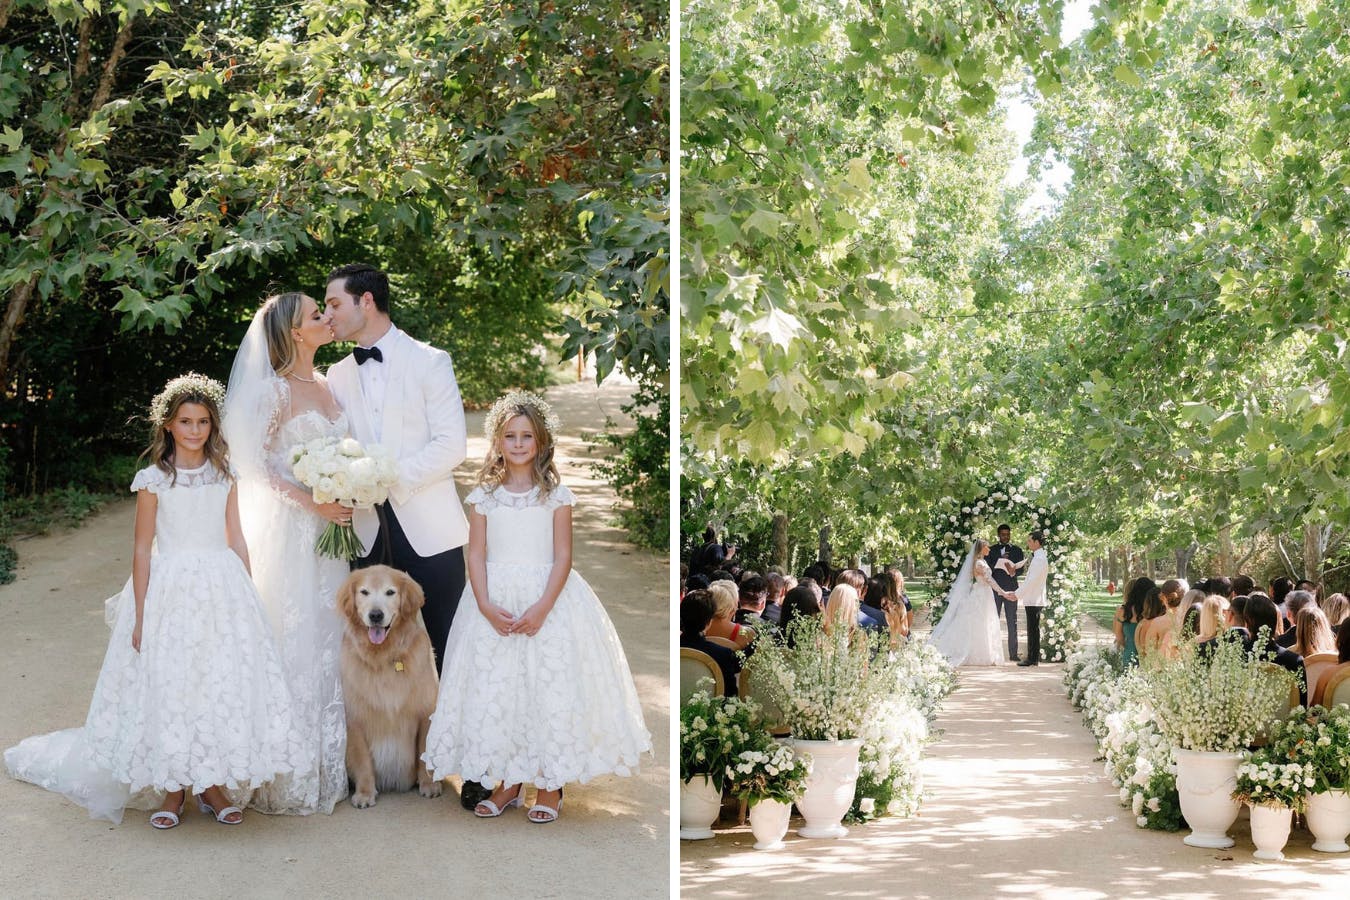 Amanda Stanton & Michael Fogel’s Garden Wedding